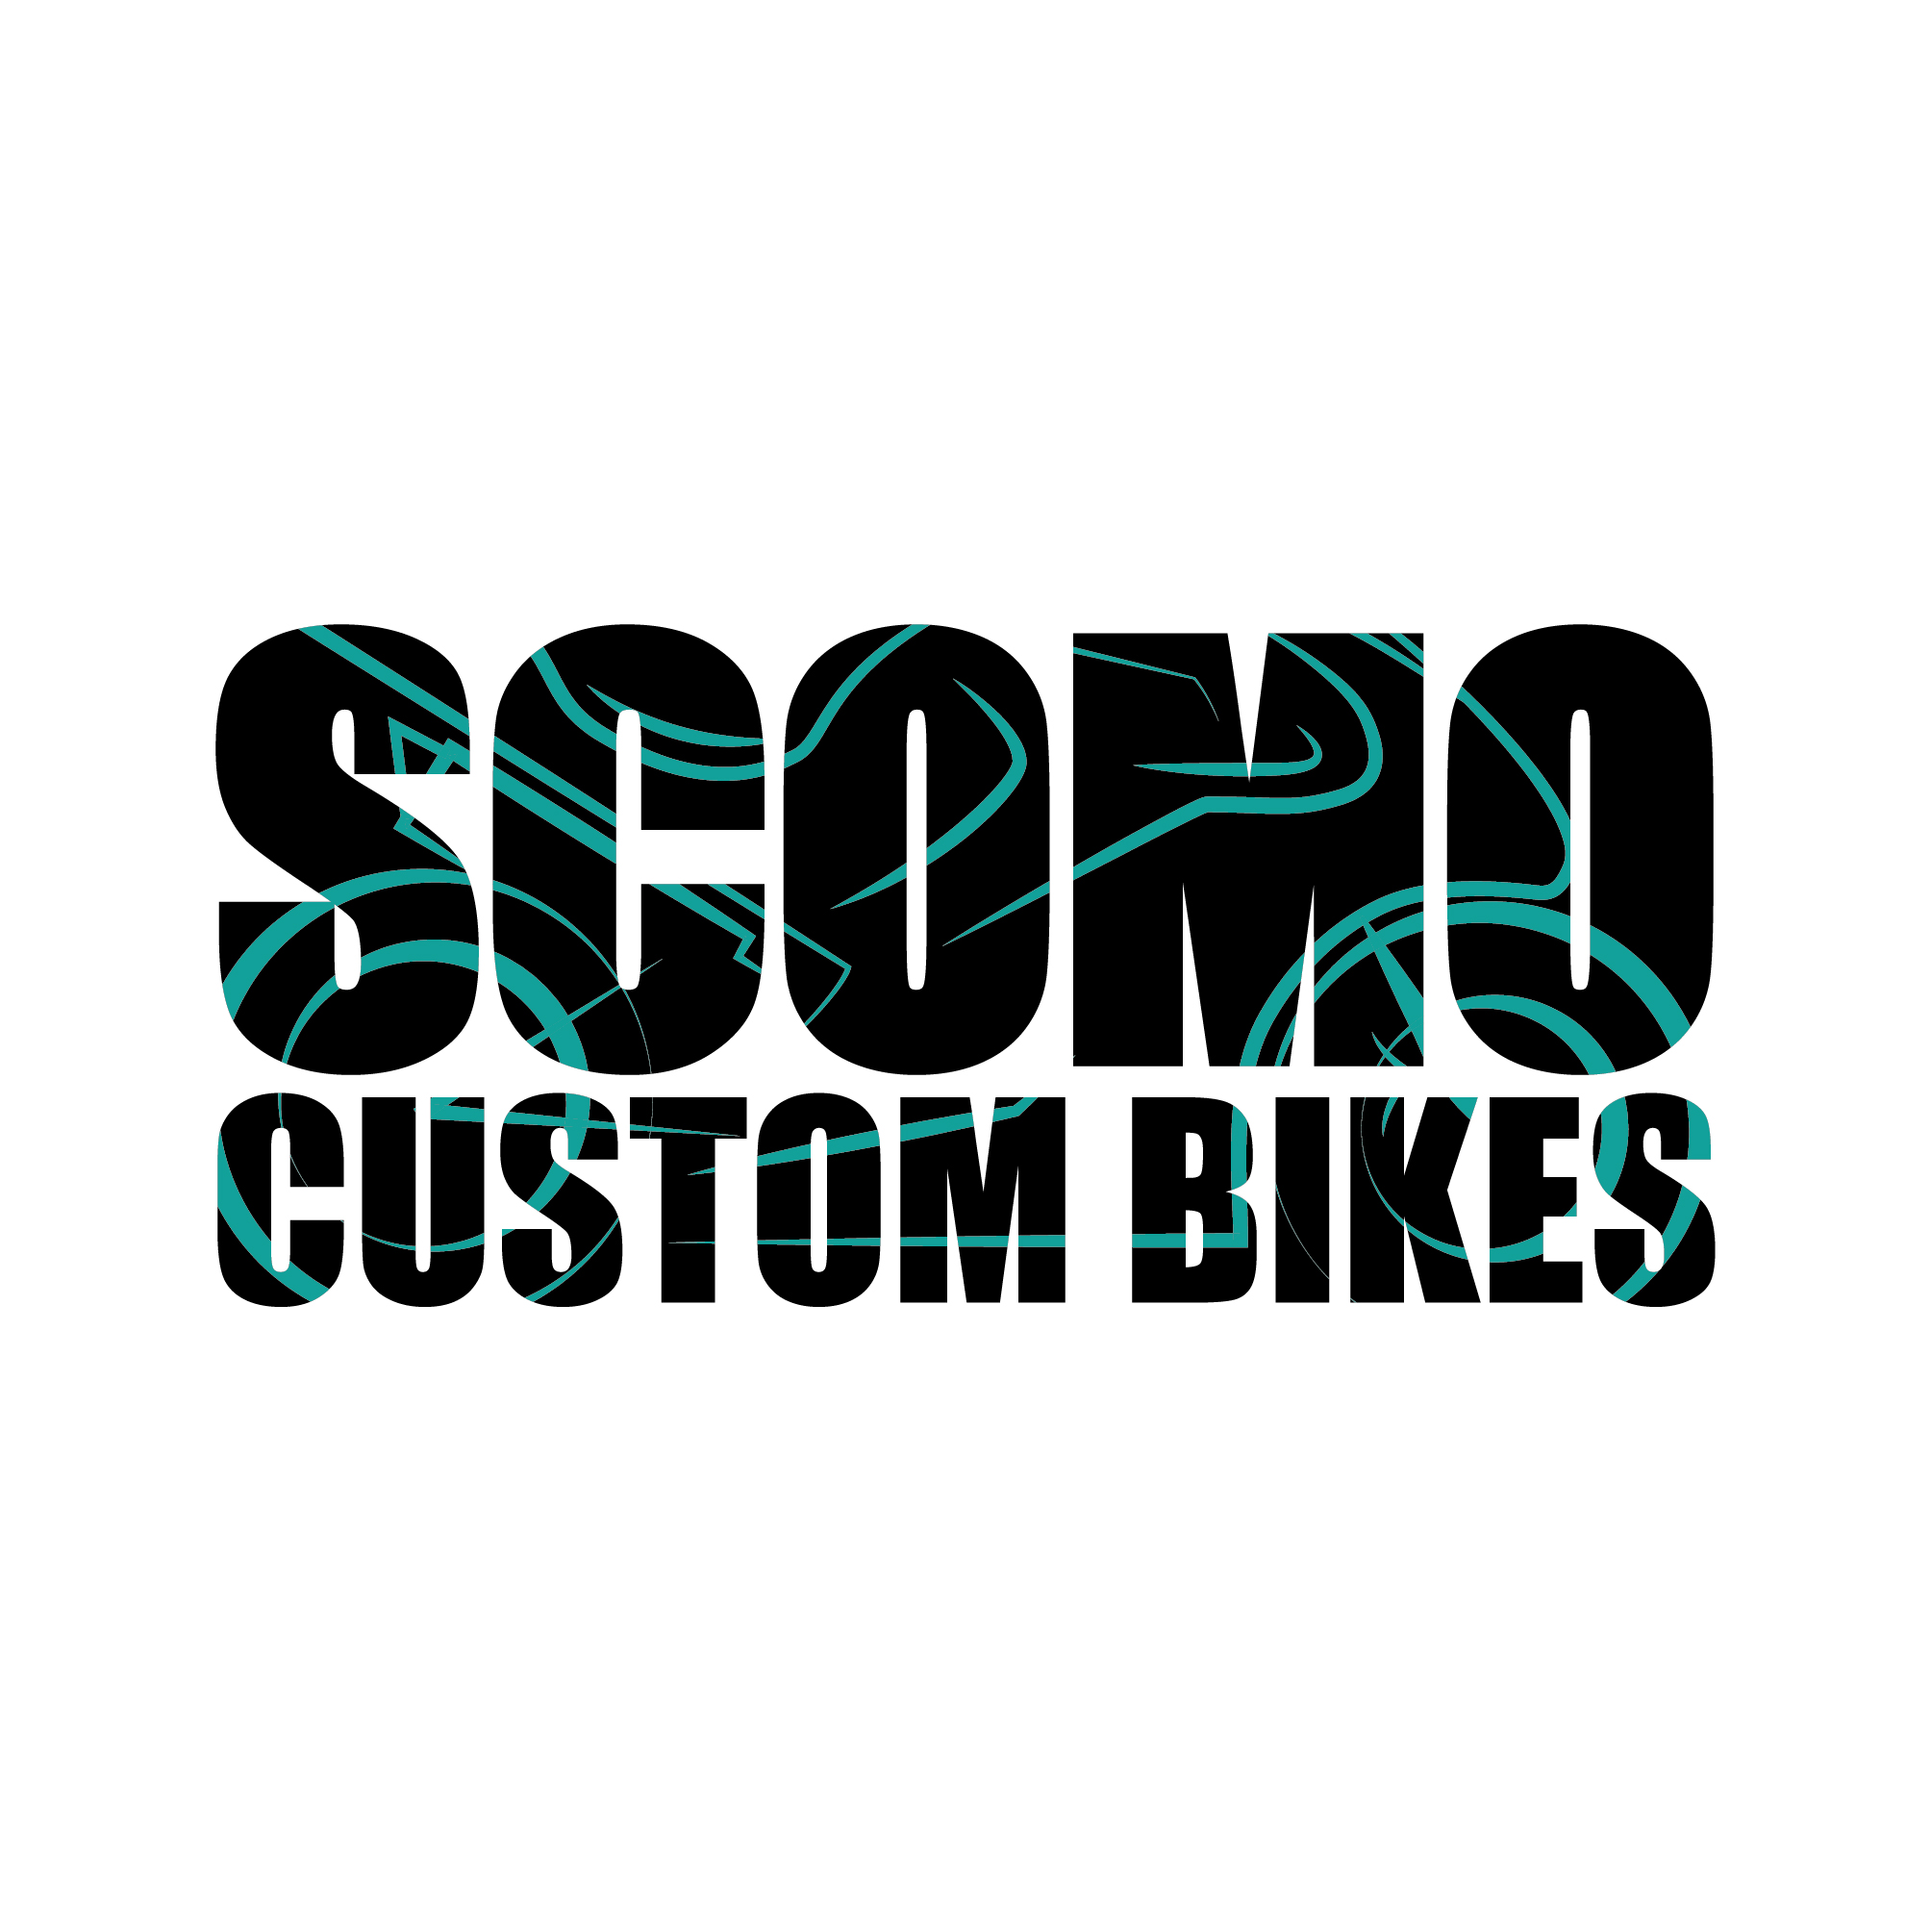 Scomo bikes